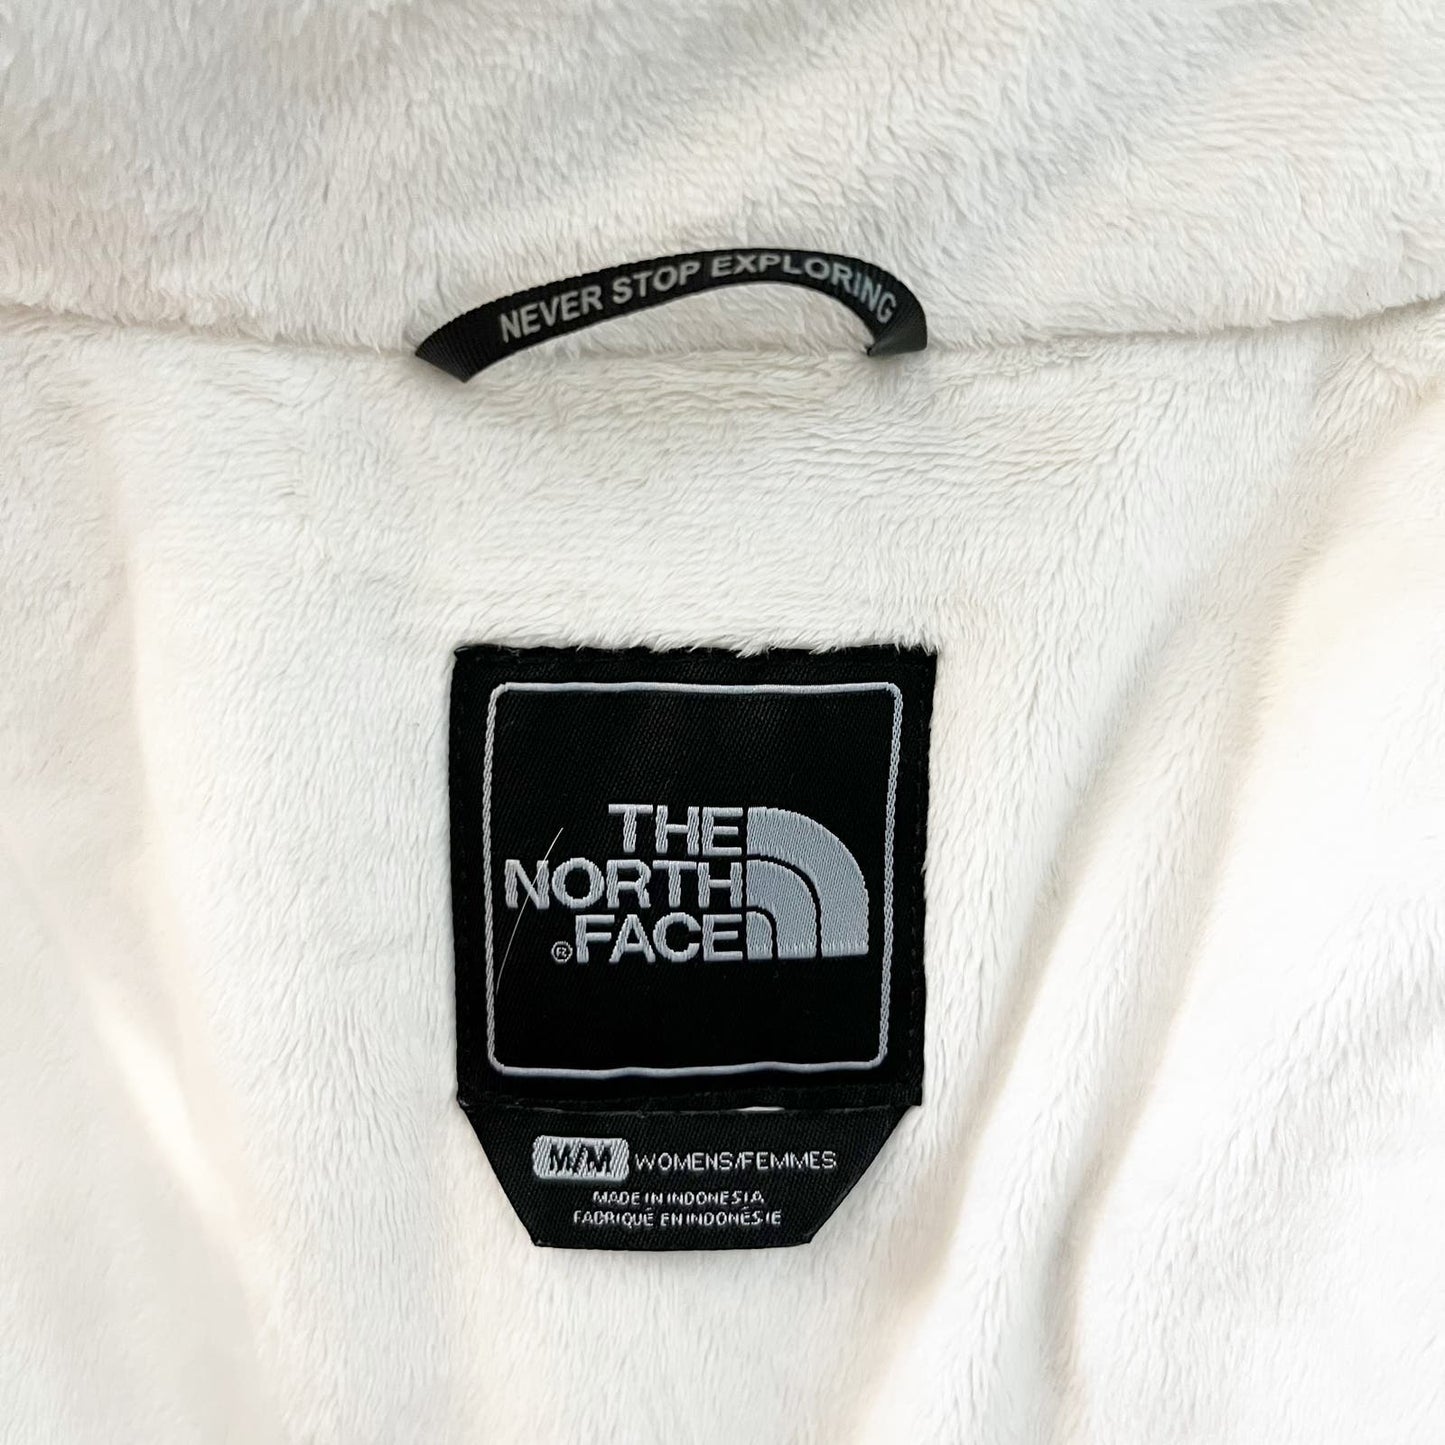 The North Face Inlux Full Zip Fleece Lined Winter Snow Coat Jacket Blue Medium